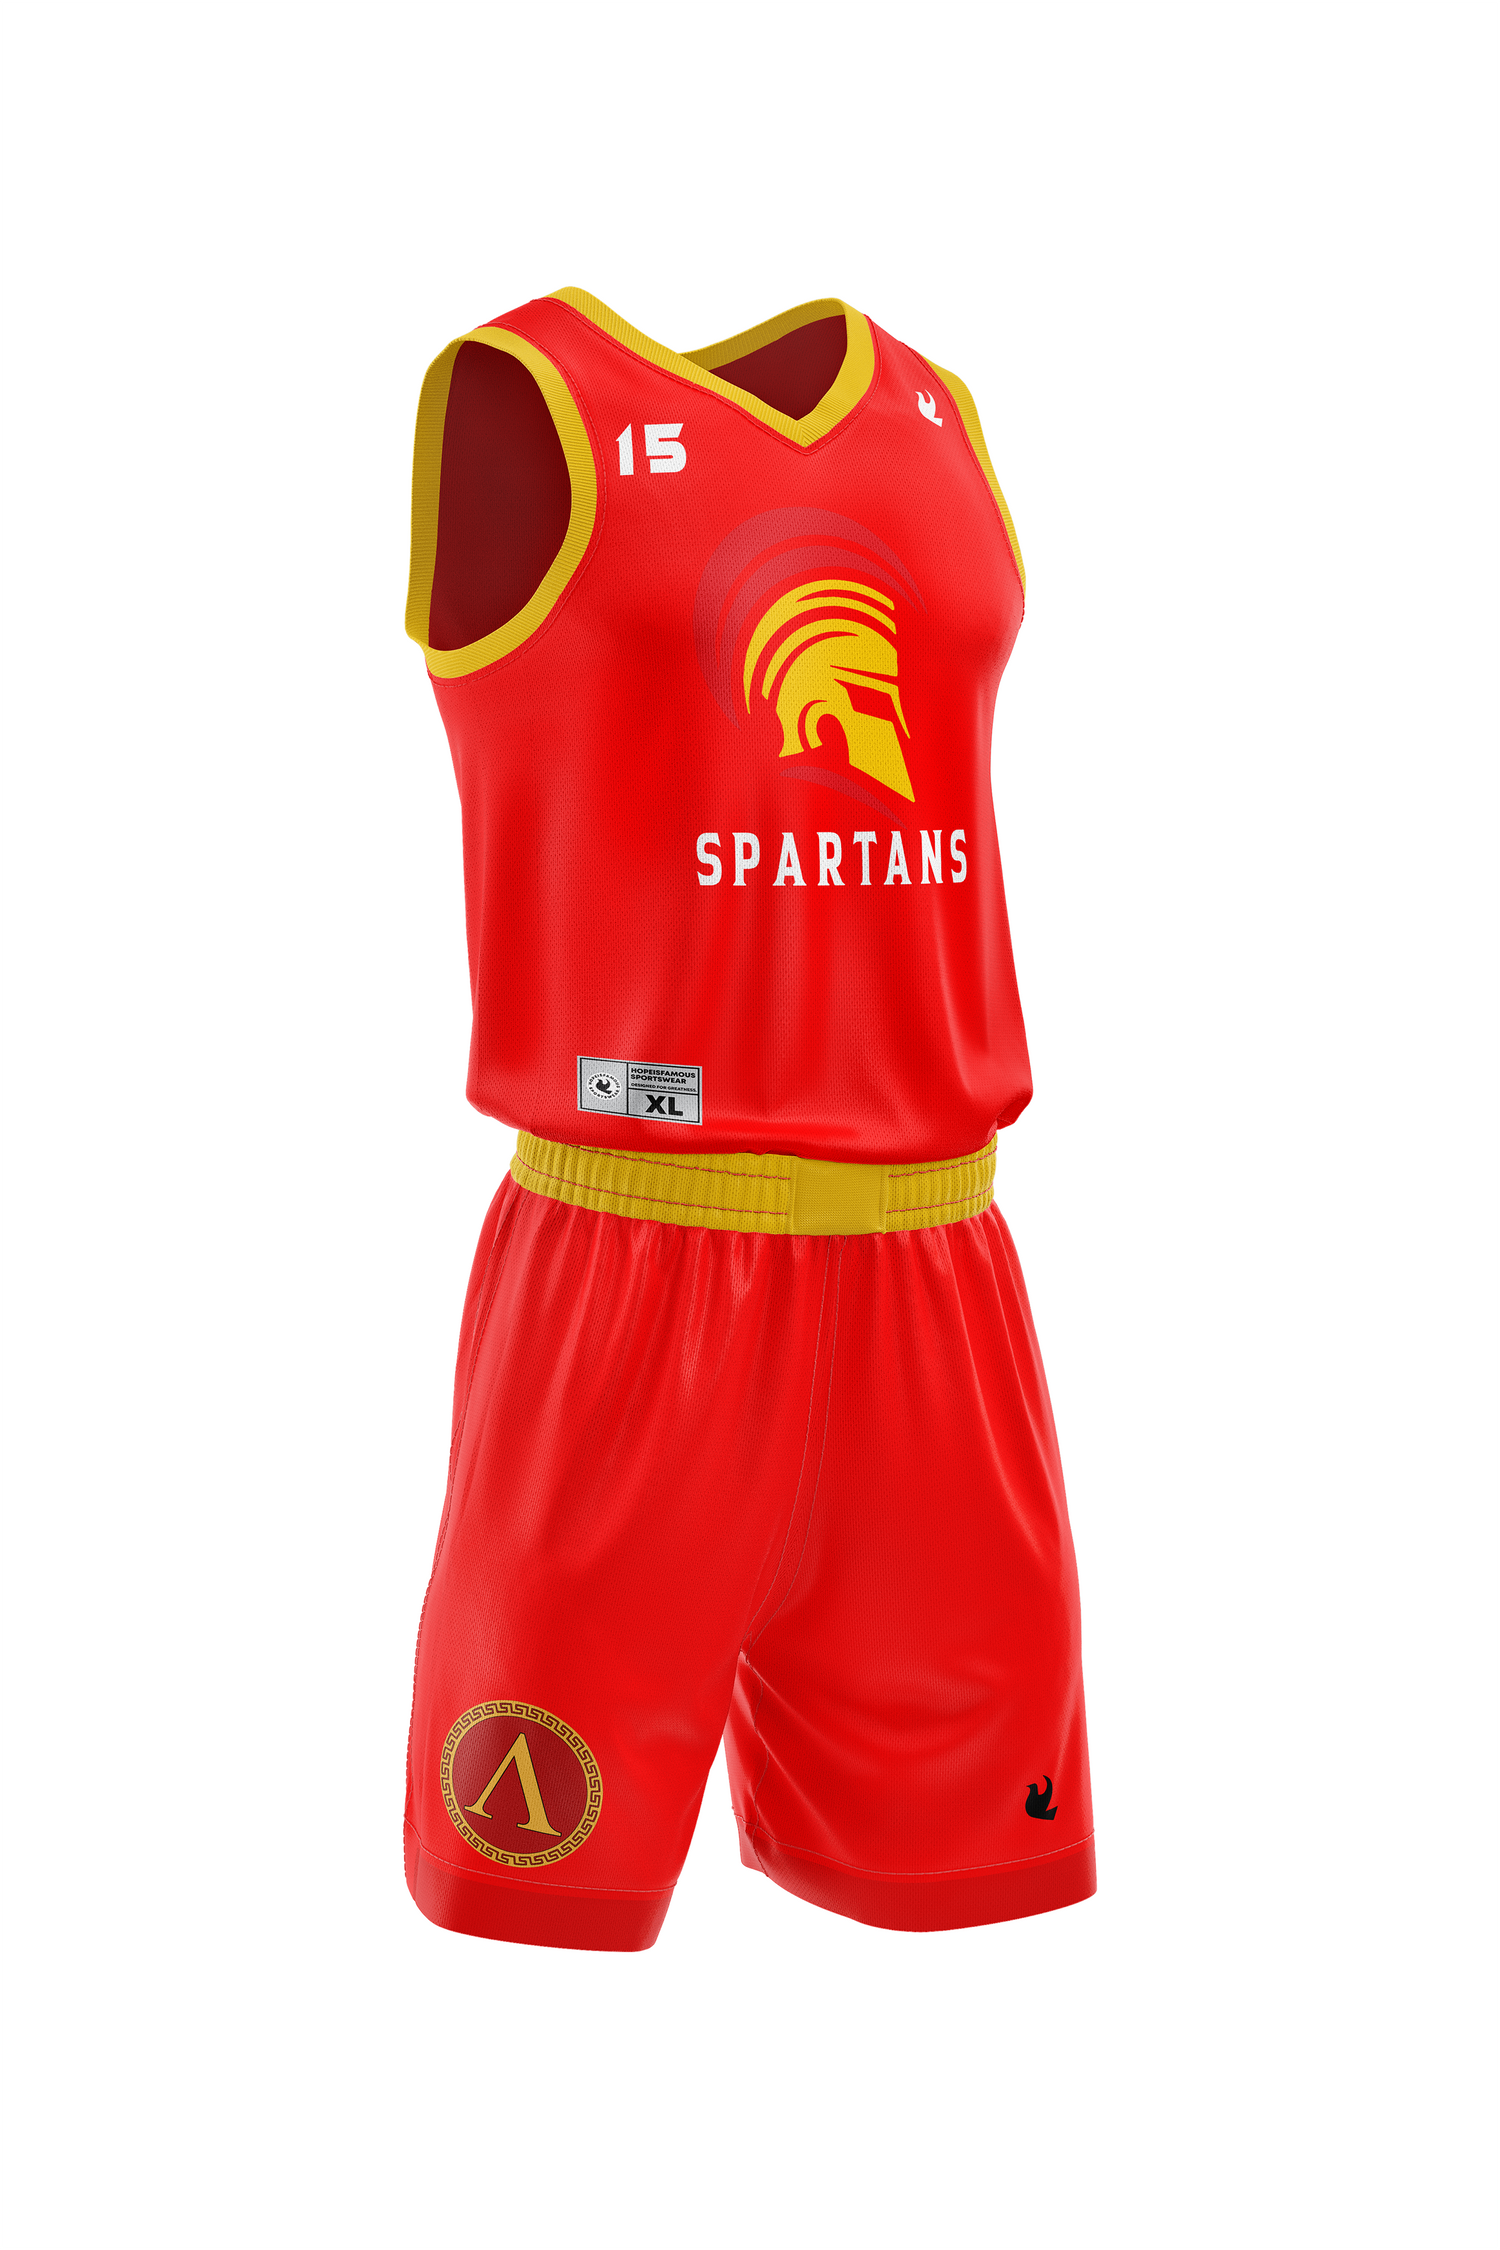 M-Power Basketball Uniform: Spartans